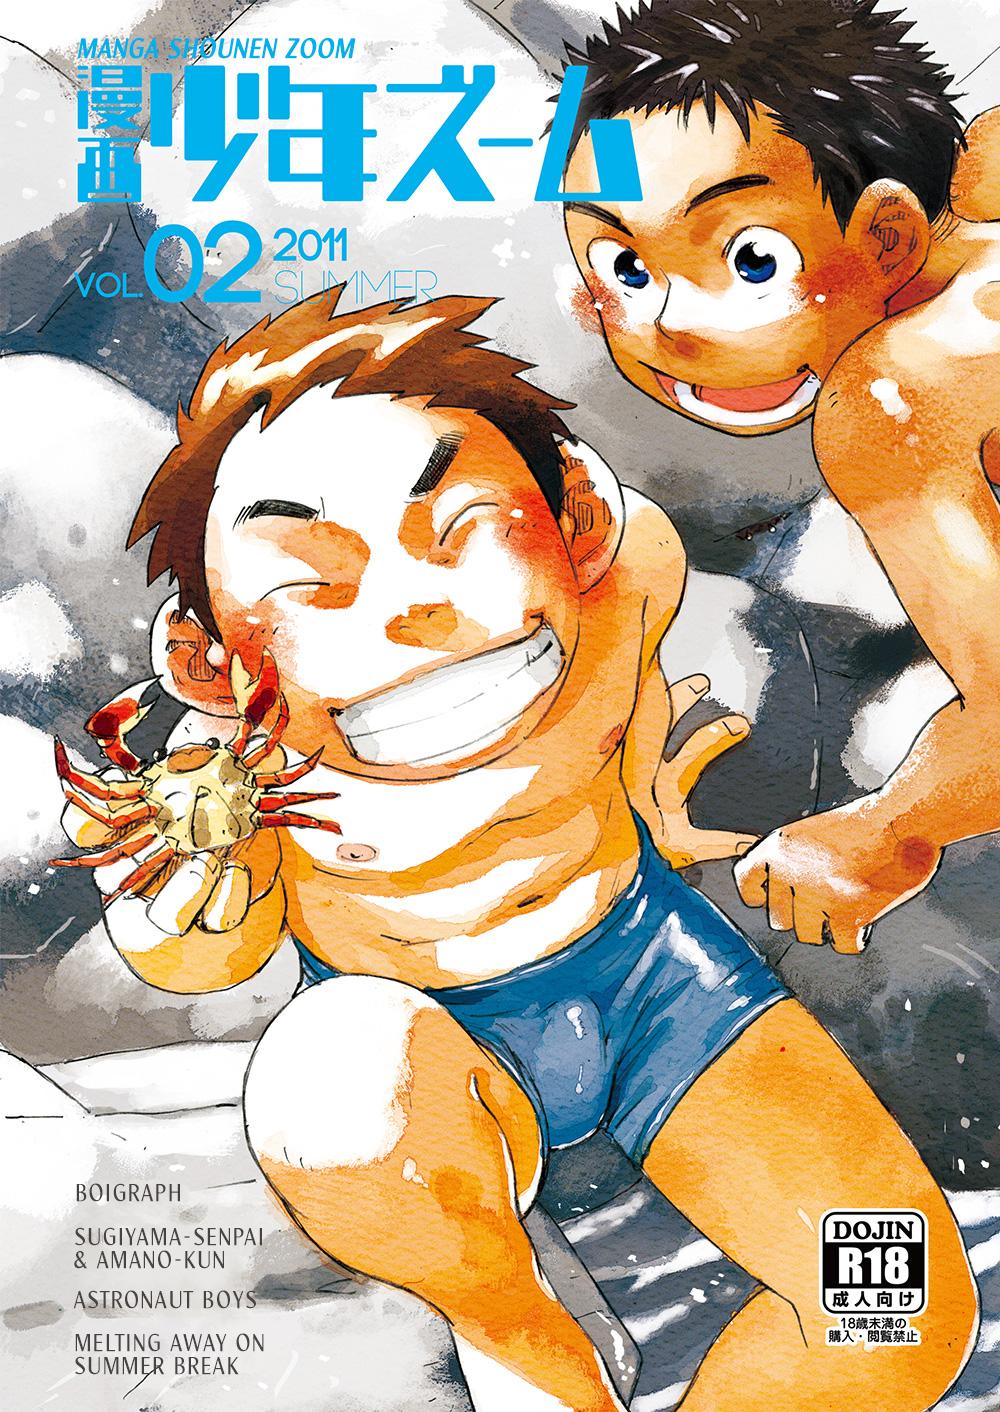 Manga Shounen Zoom Vol. 02 1